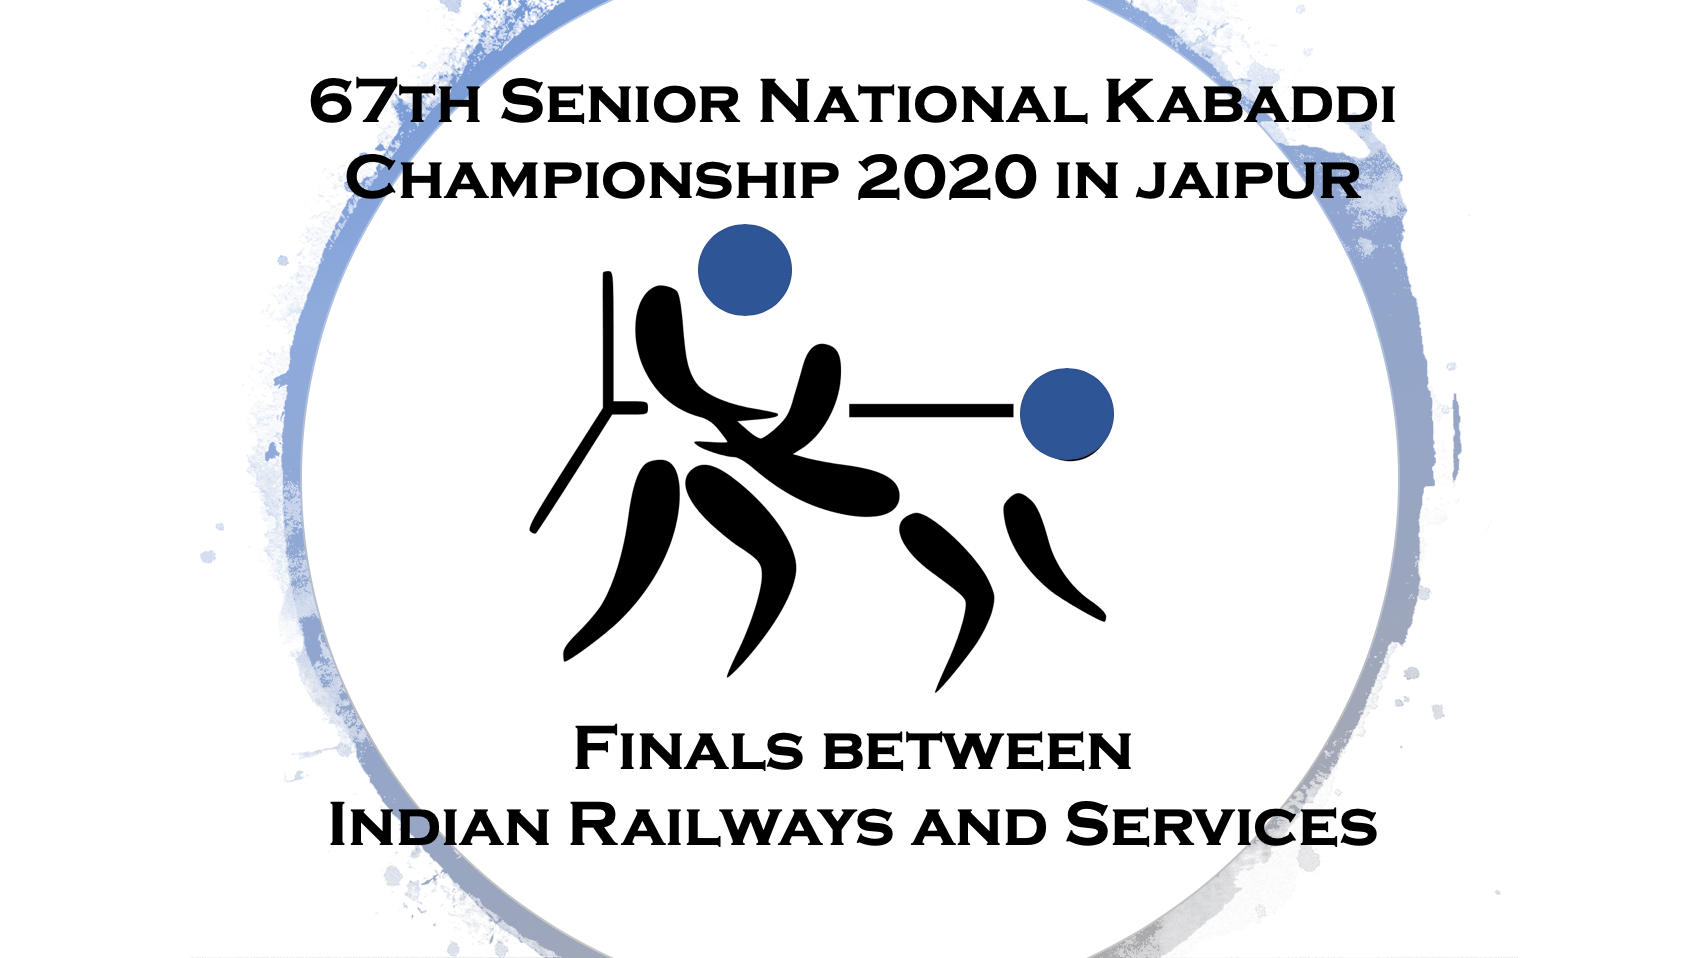 The 67th Senior National Kabaddi Championship 2020 sees Indian Railways win